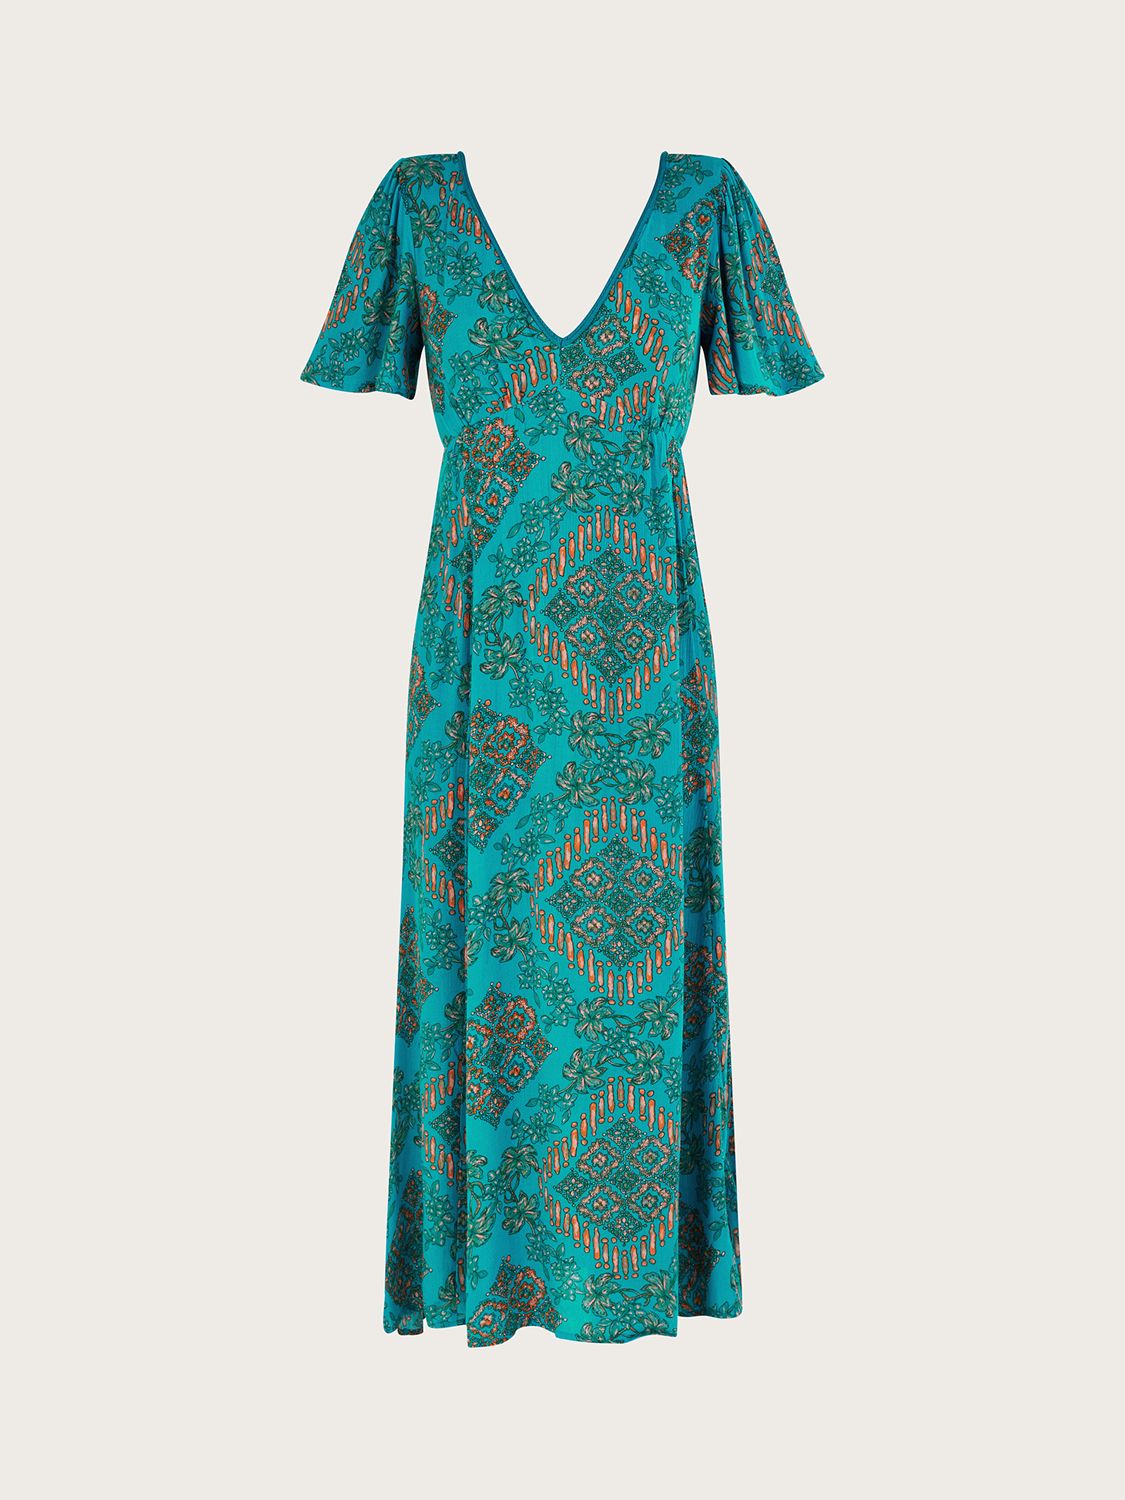 Monsoon Tile Effect Midi Dress, Turquoise/Multi at John Lewis & Partners